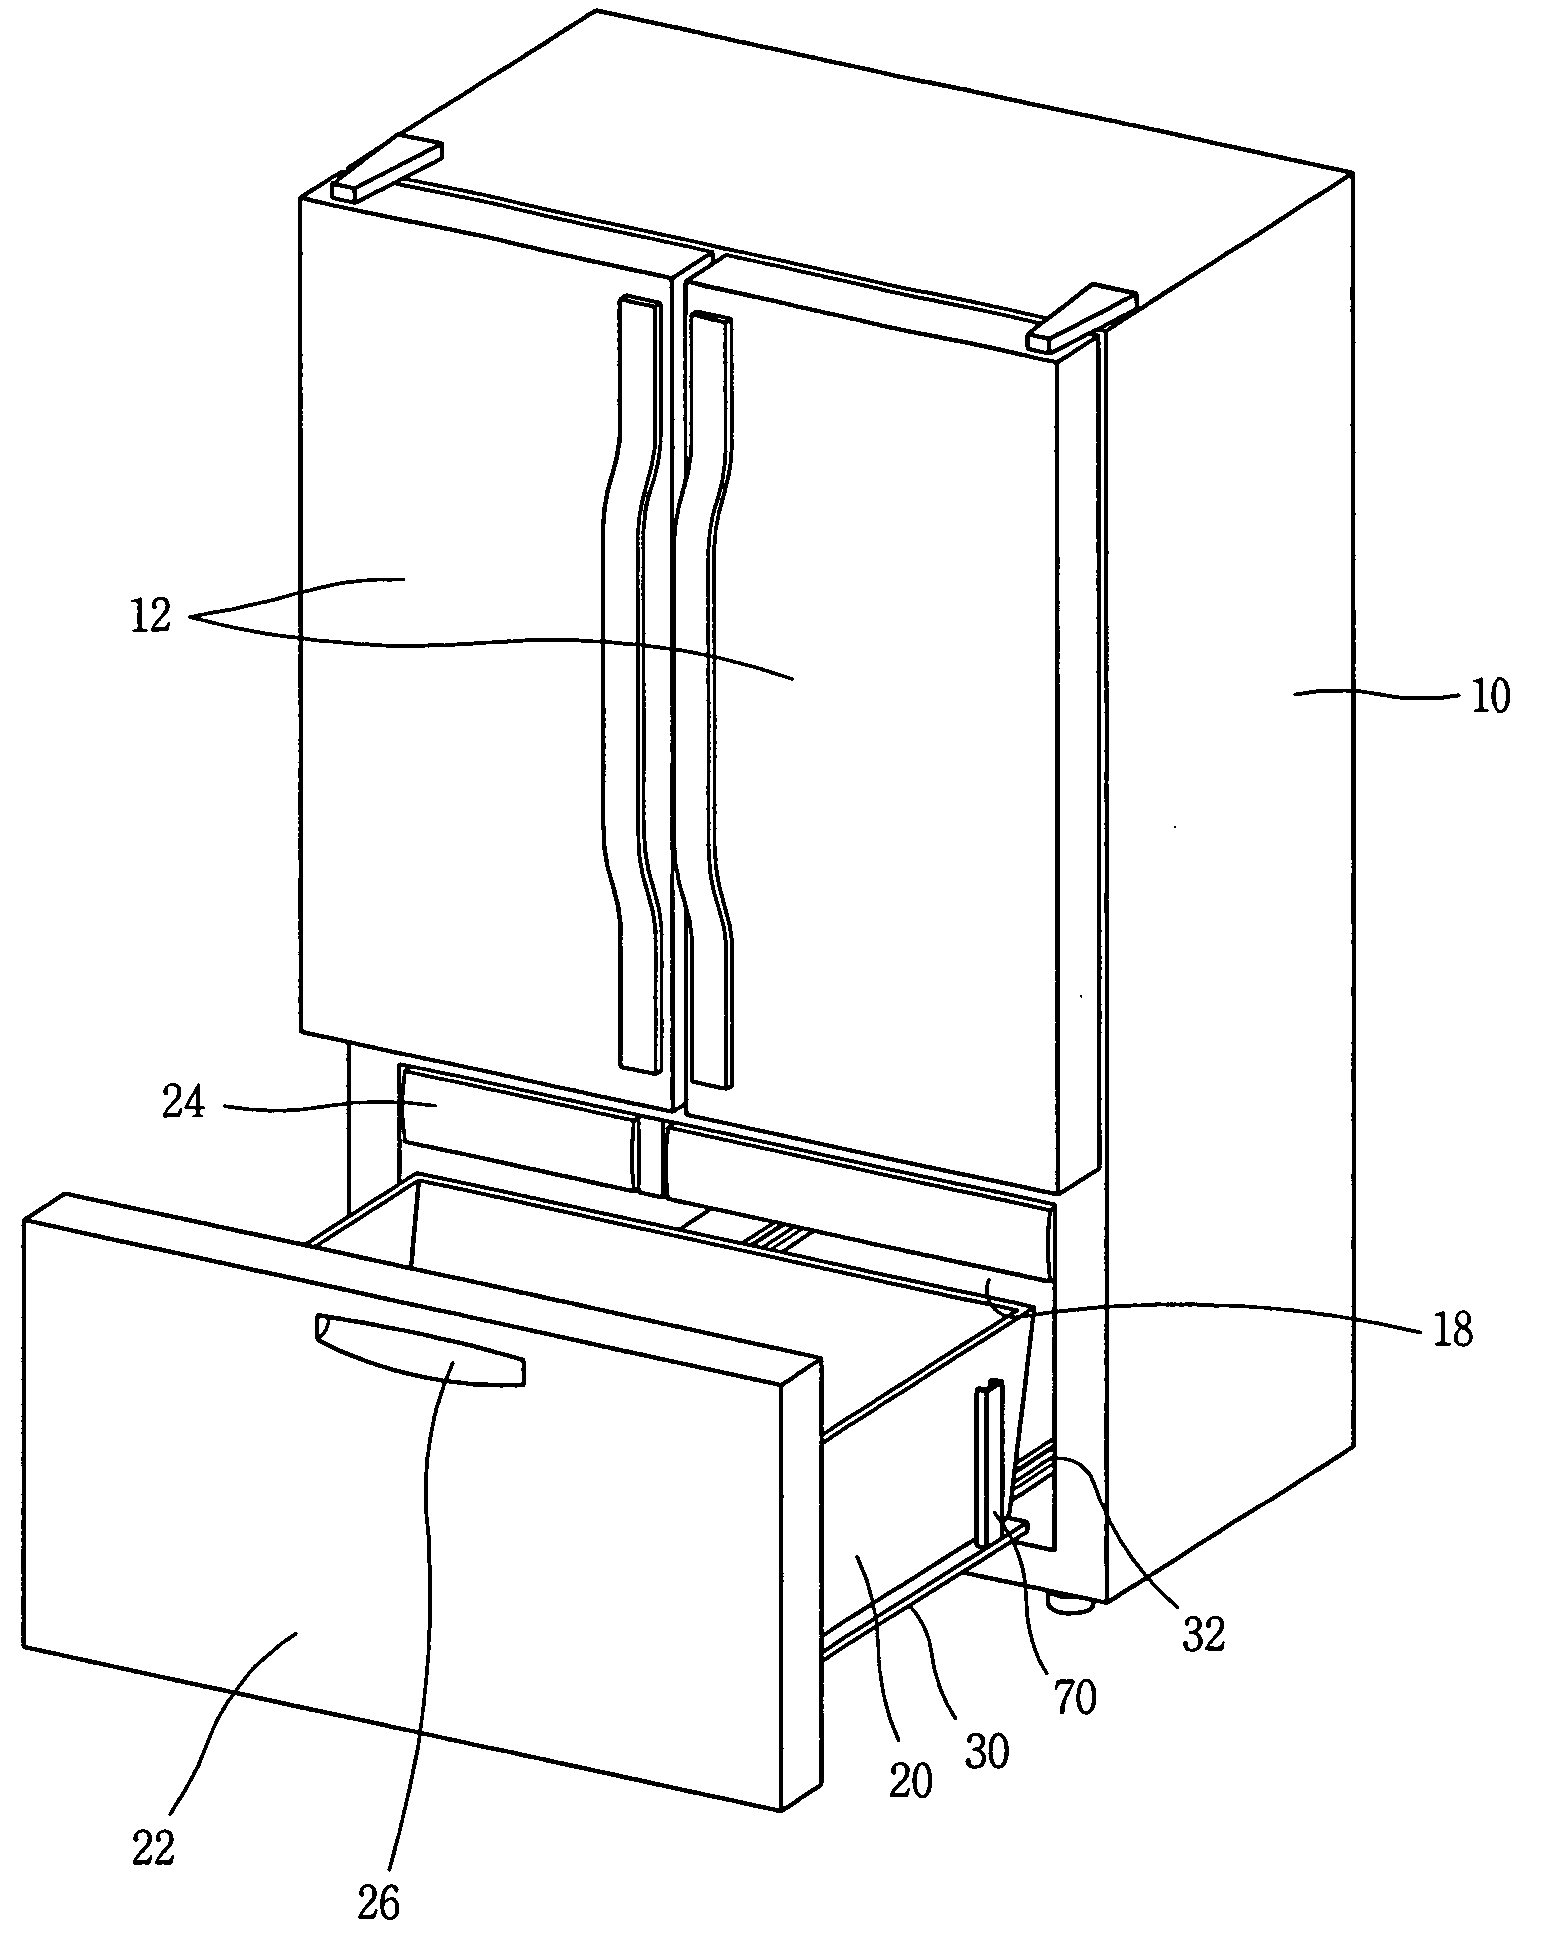 Bottom drawer type refrigerator having basket lift device